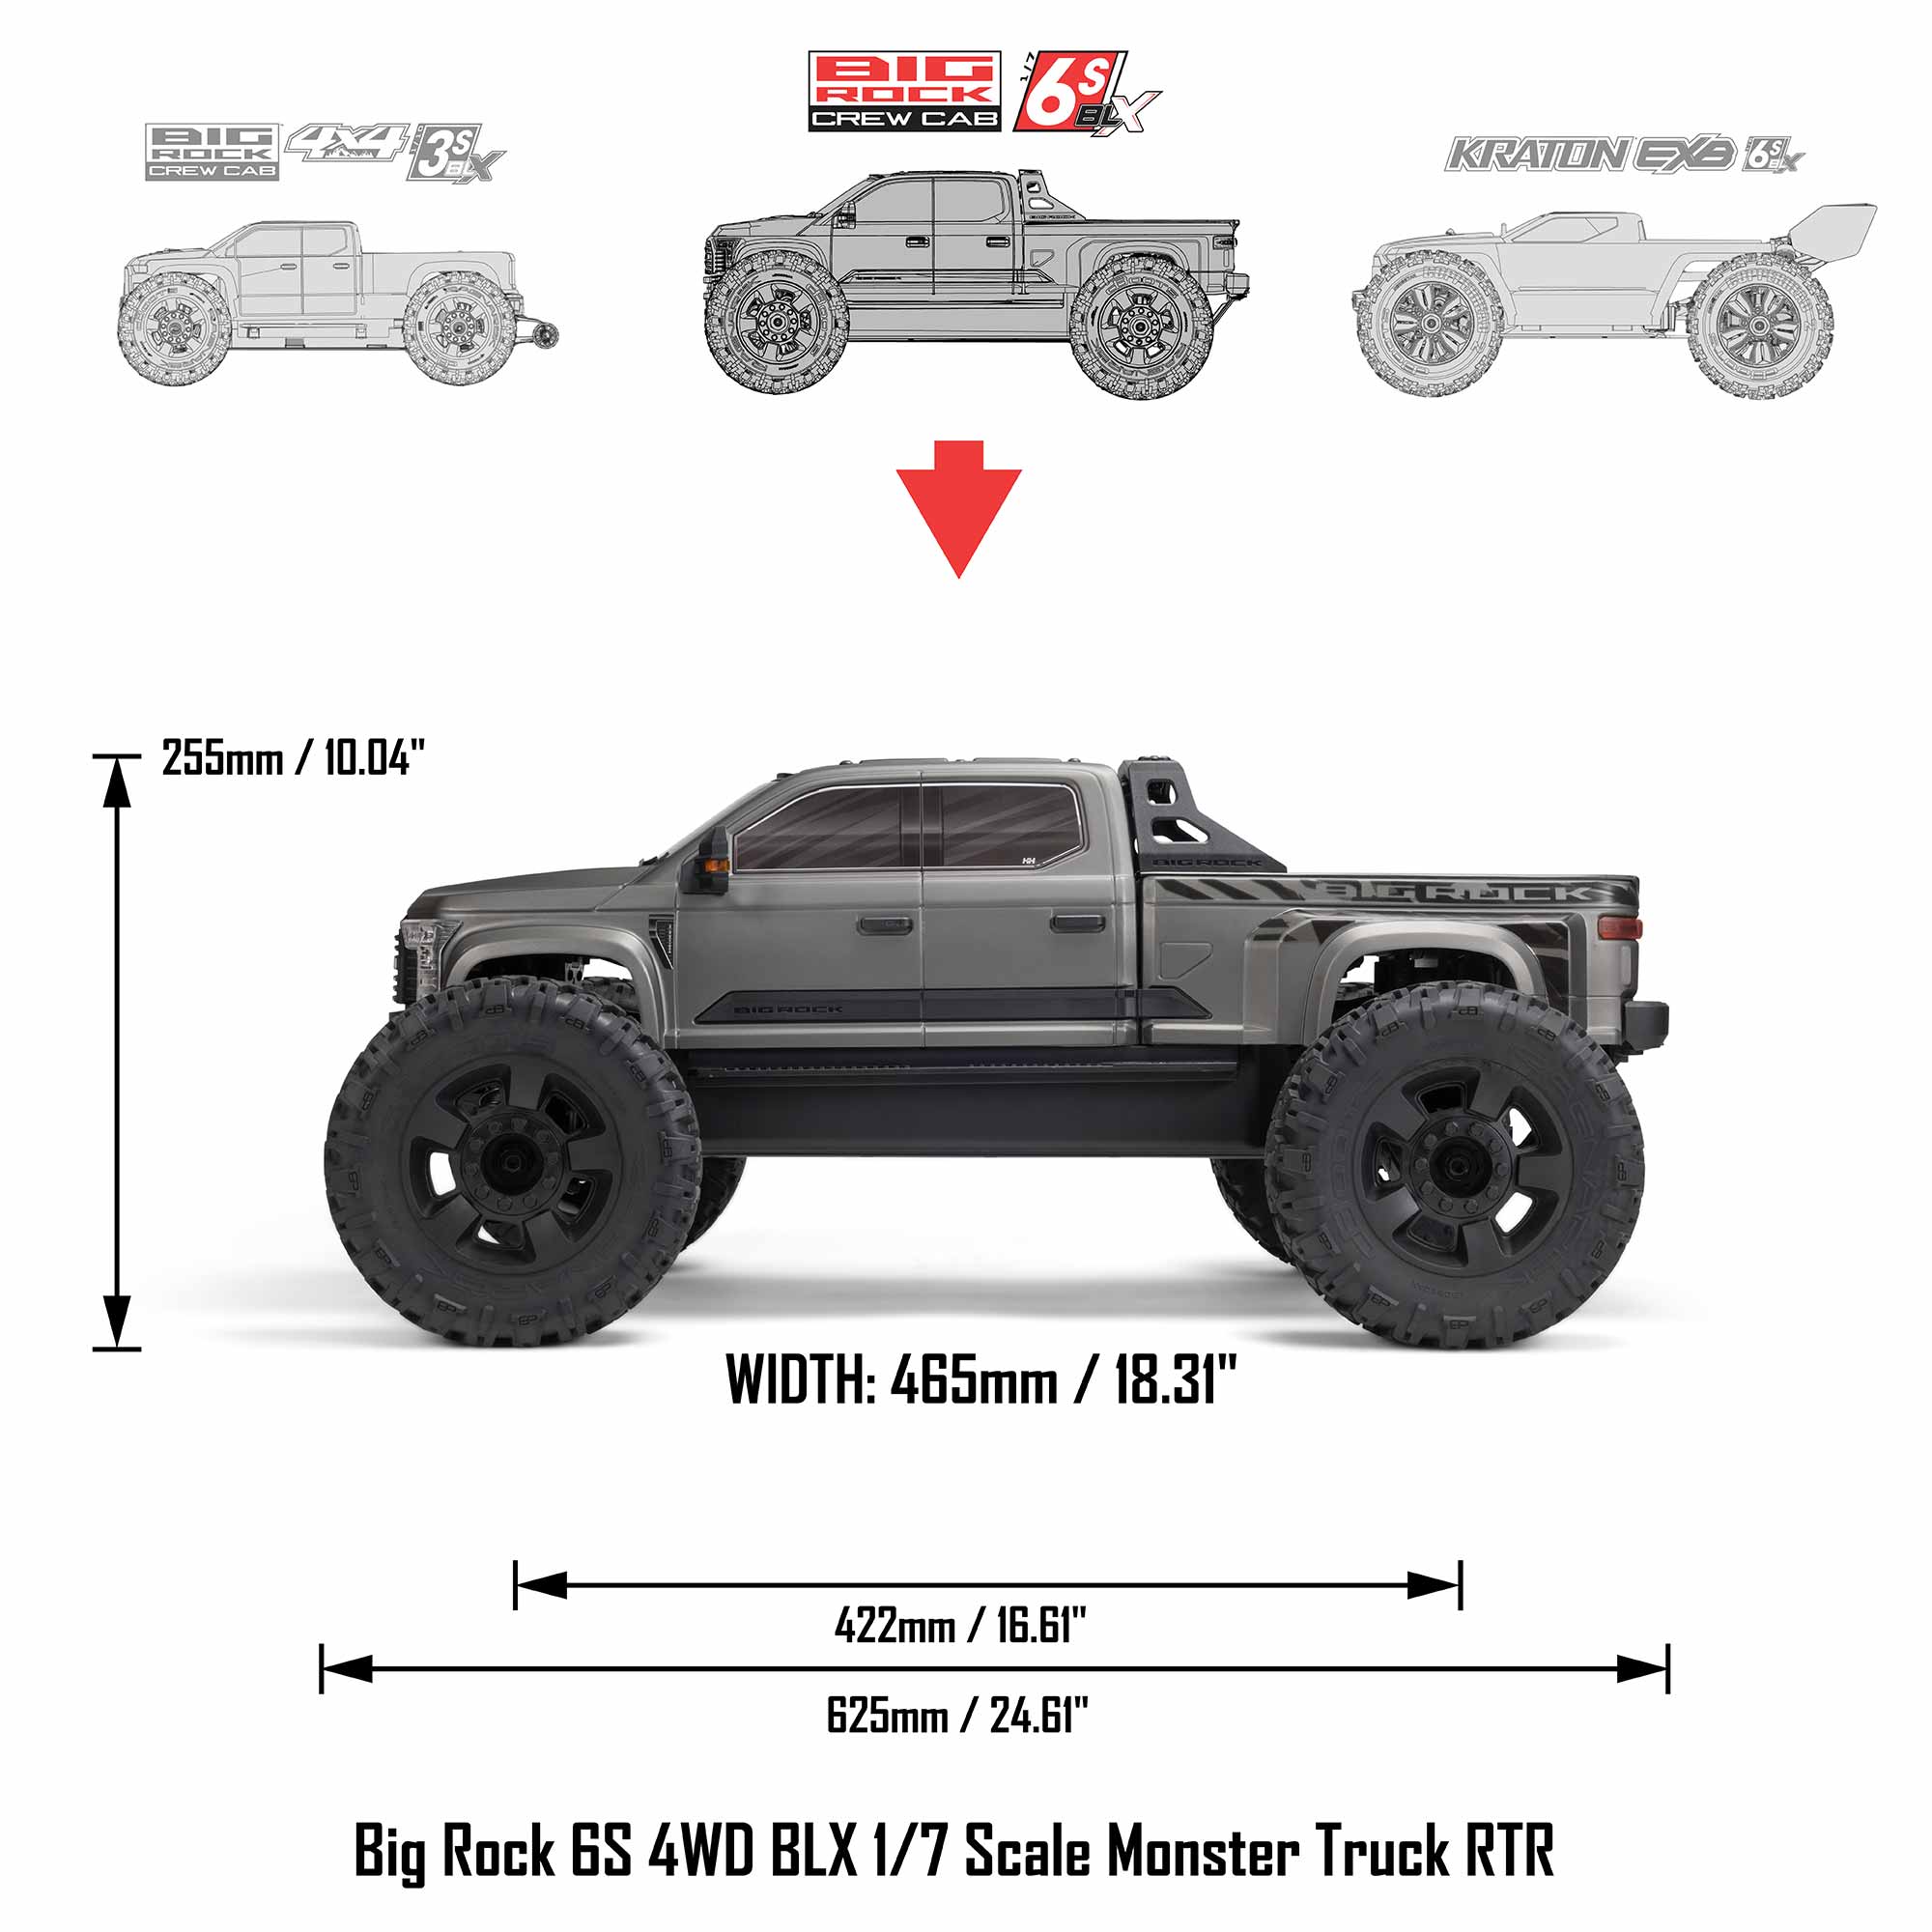 1/7 BIG ROCK 6S 4X4 BLX Monster Truck RTR, Bronce